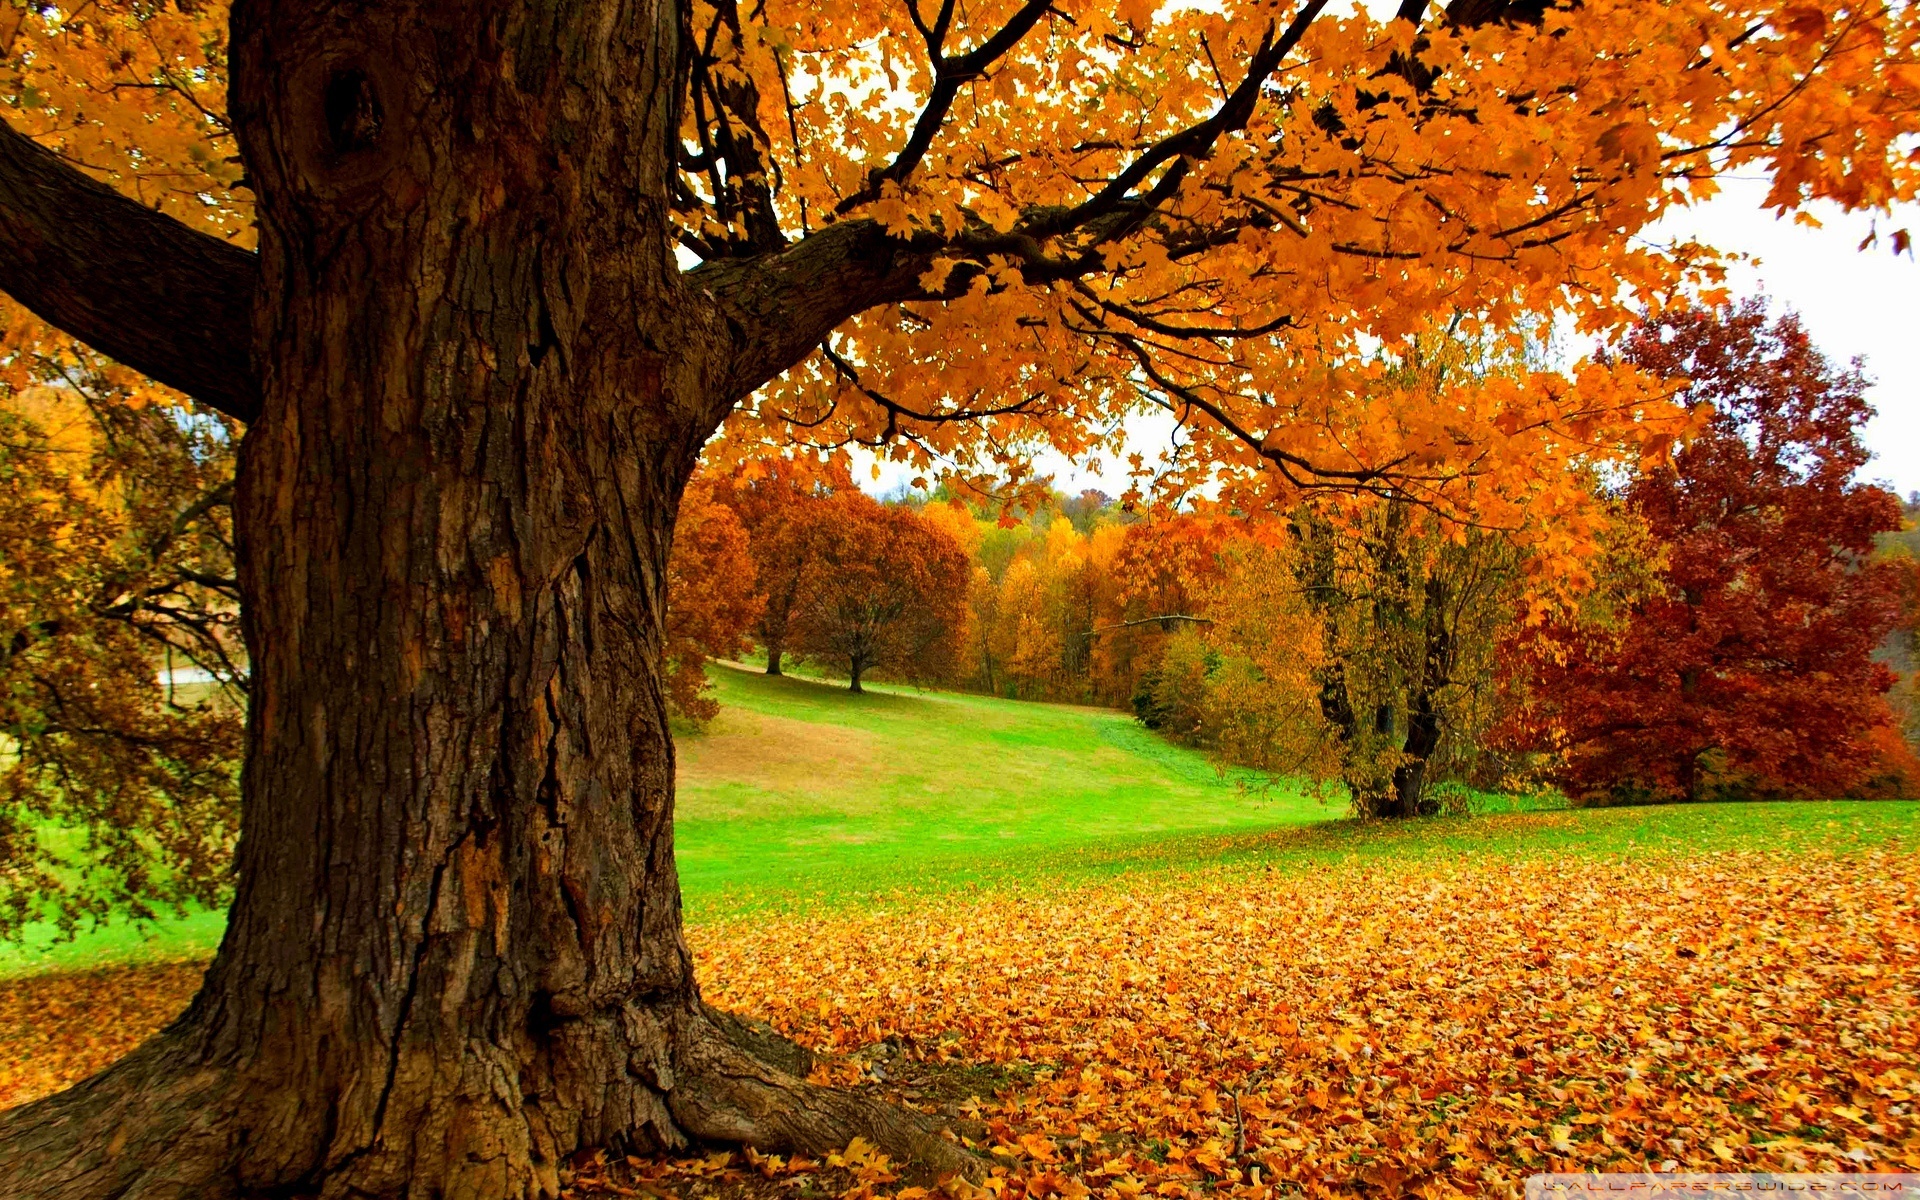 Spectacular autumn scene - HD wallpaper download. Wallpapers ...